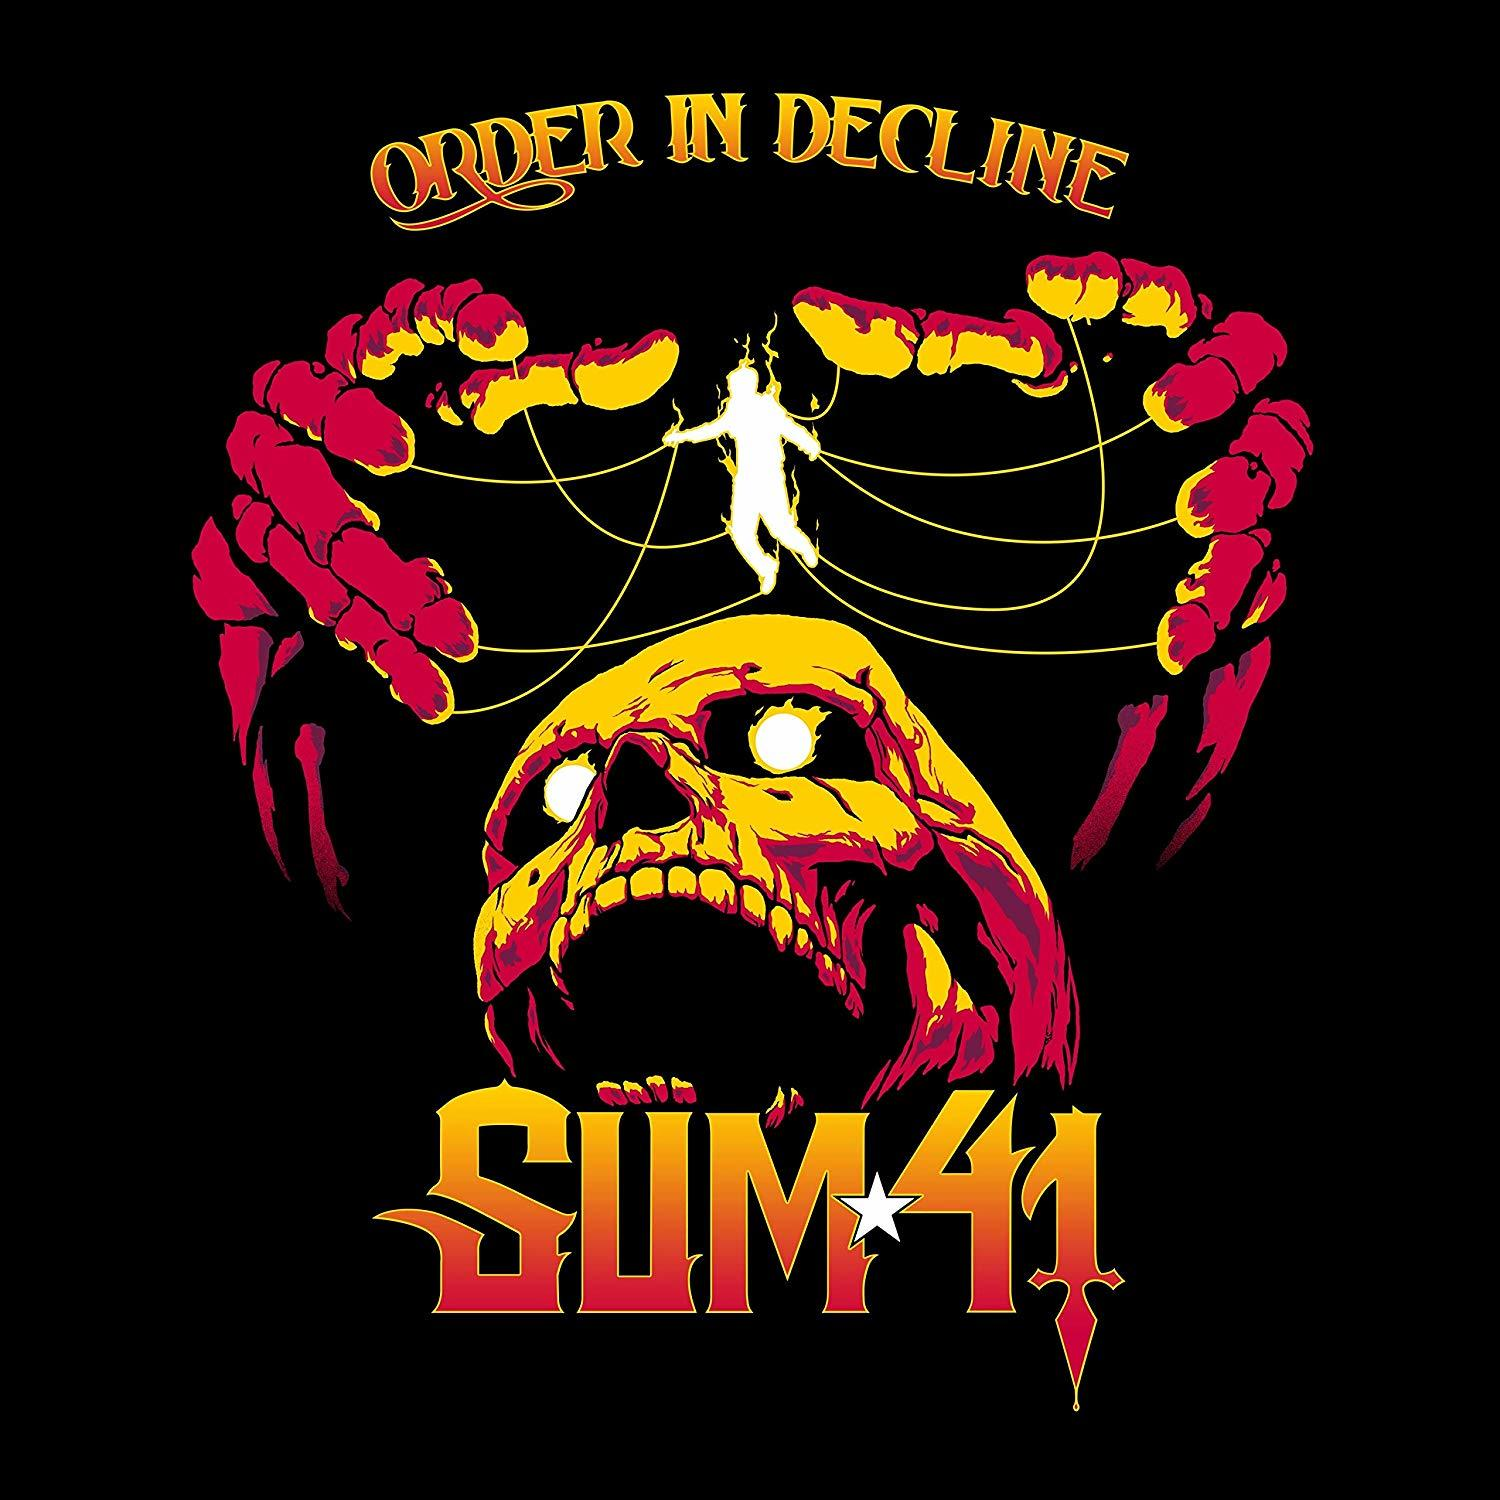 In - Sum Decline Order - 41 (CD)